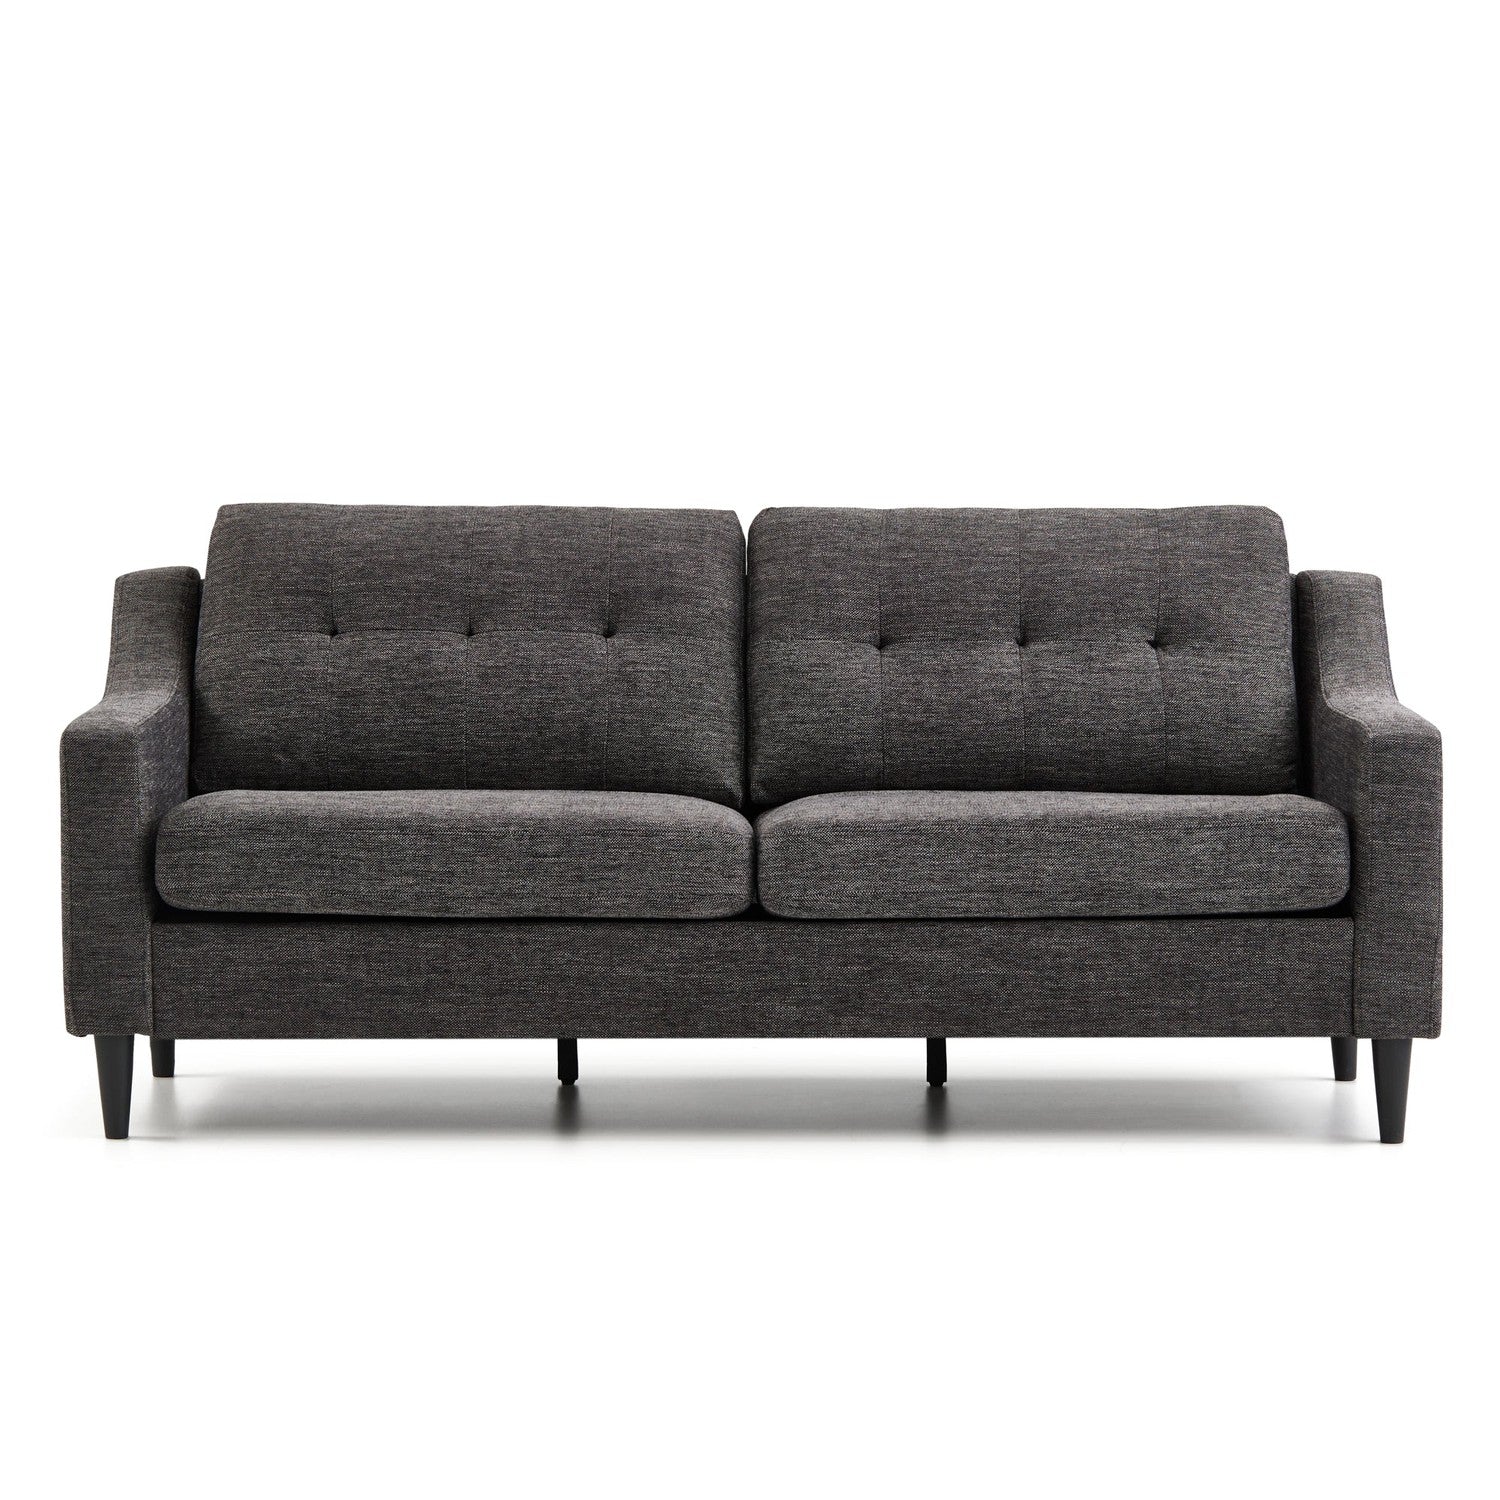 Weekender Bingham Sofa-Purely Relaxation